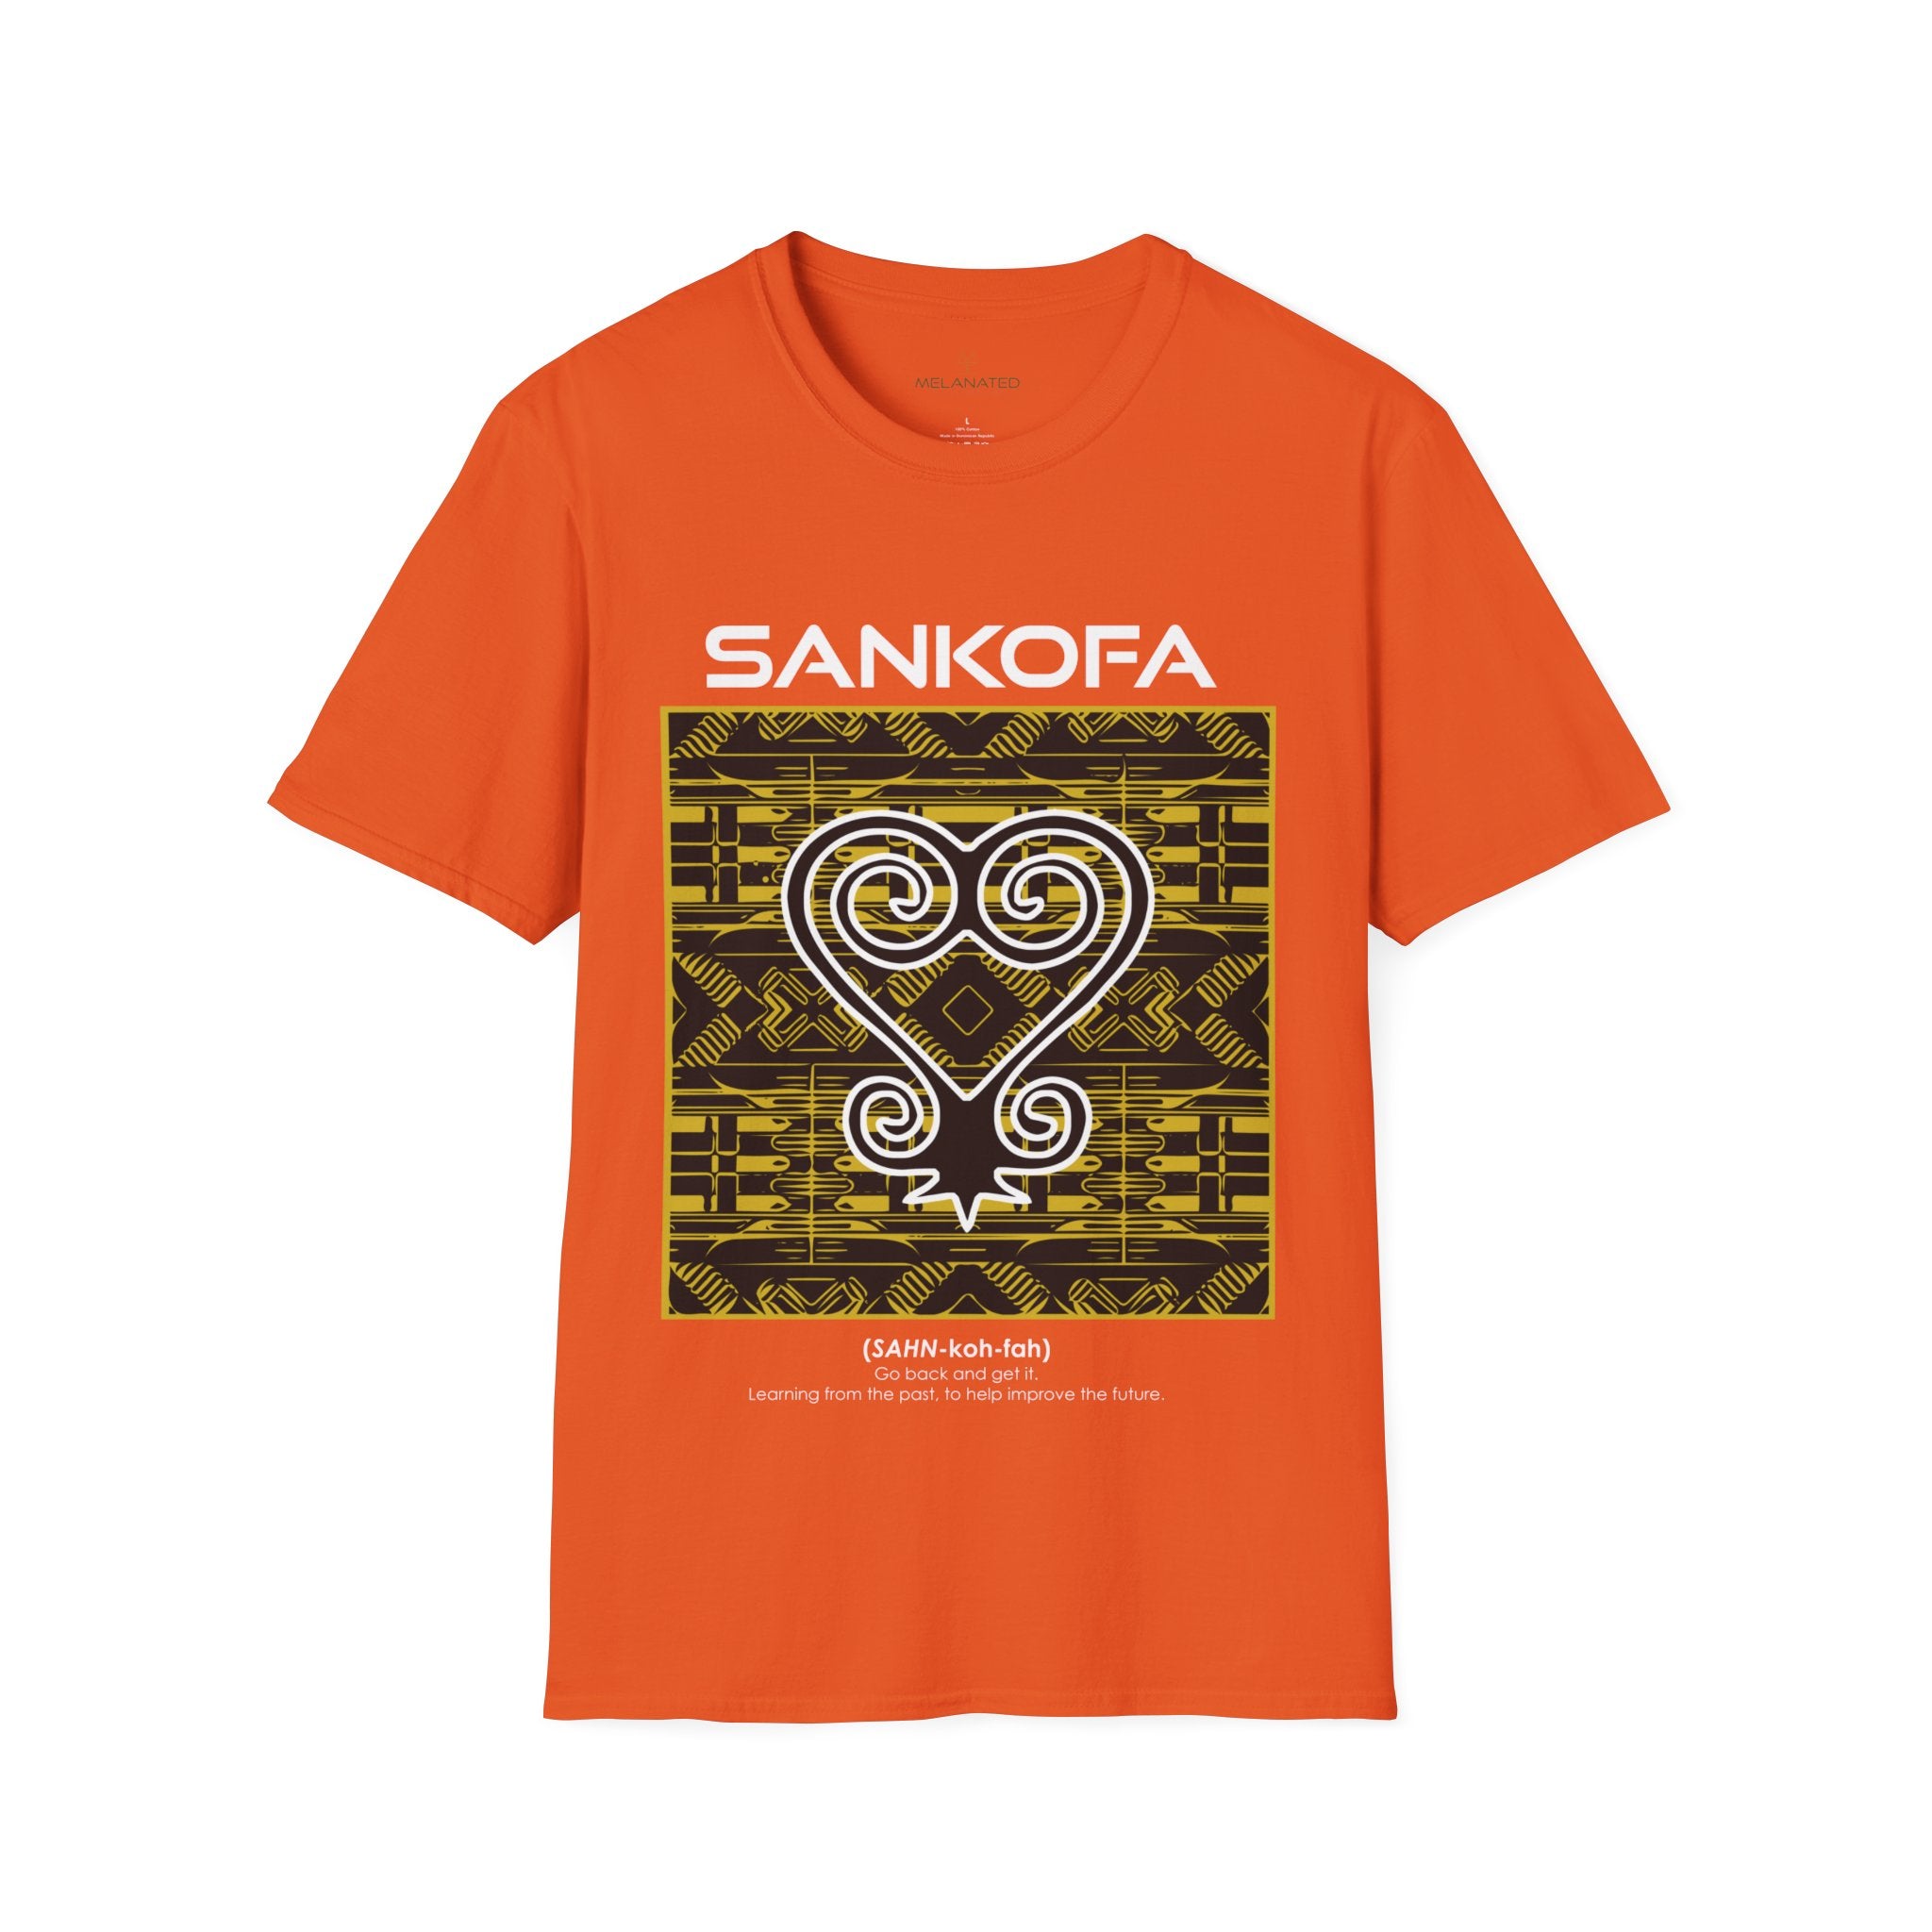 Adinka Sankofa African Tee Shirt in orange.